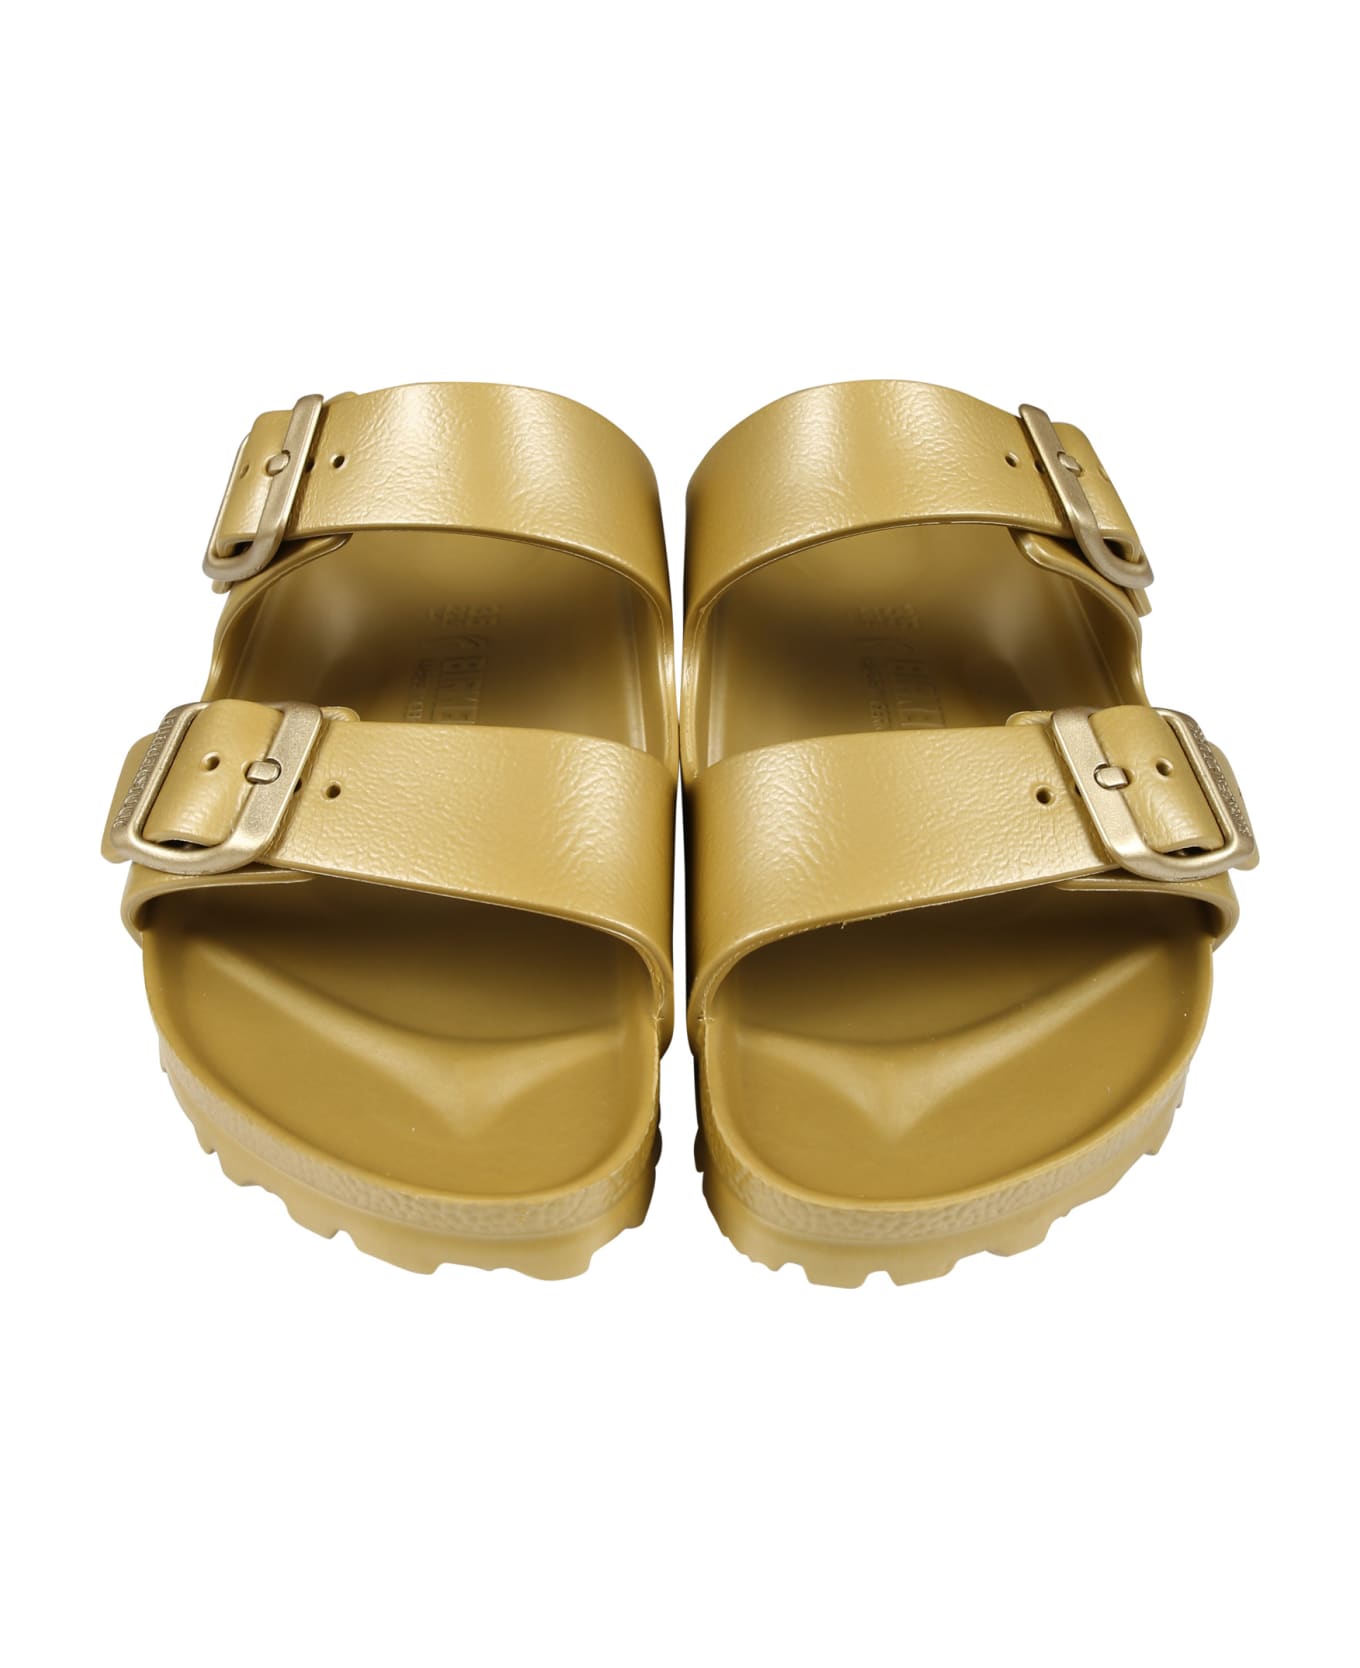 Birkenstock Arizona Eva Gold Sandals For Kids With Logo - Gold シューズ